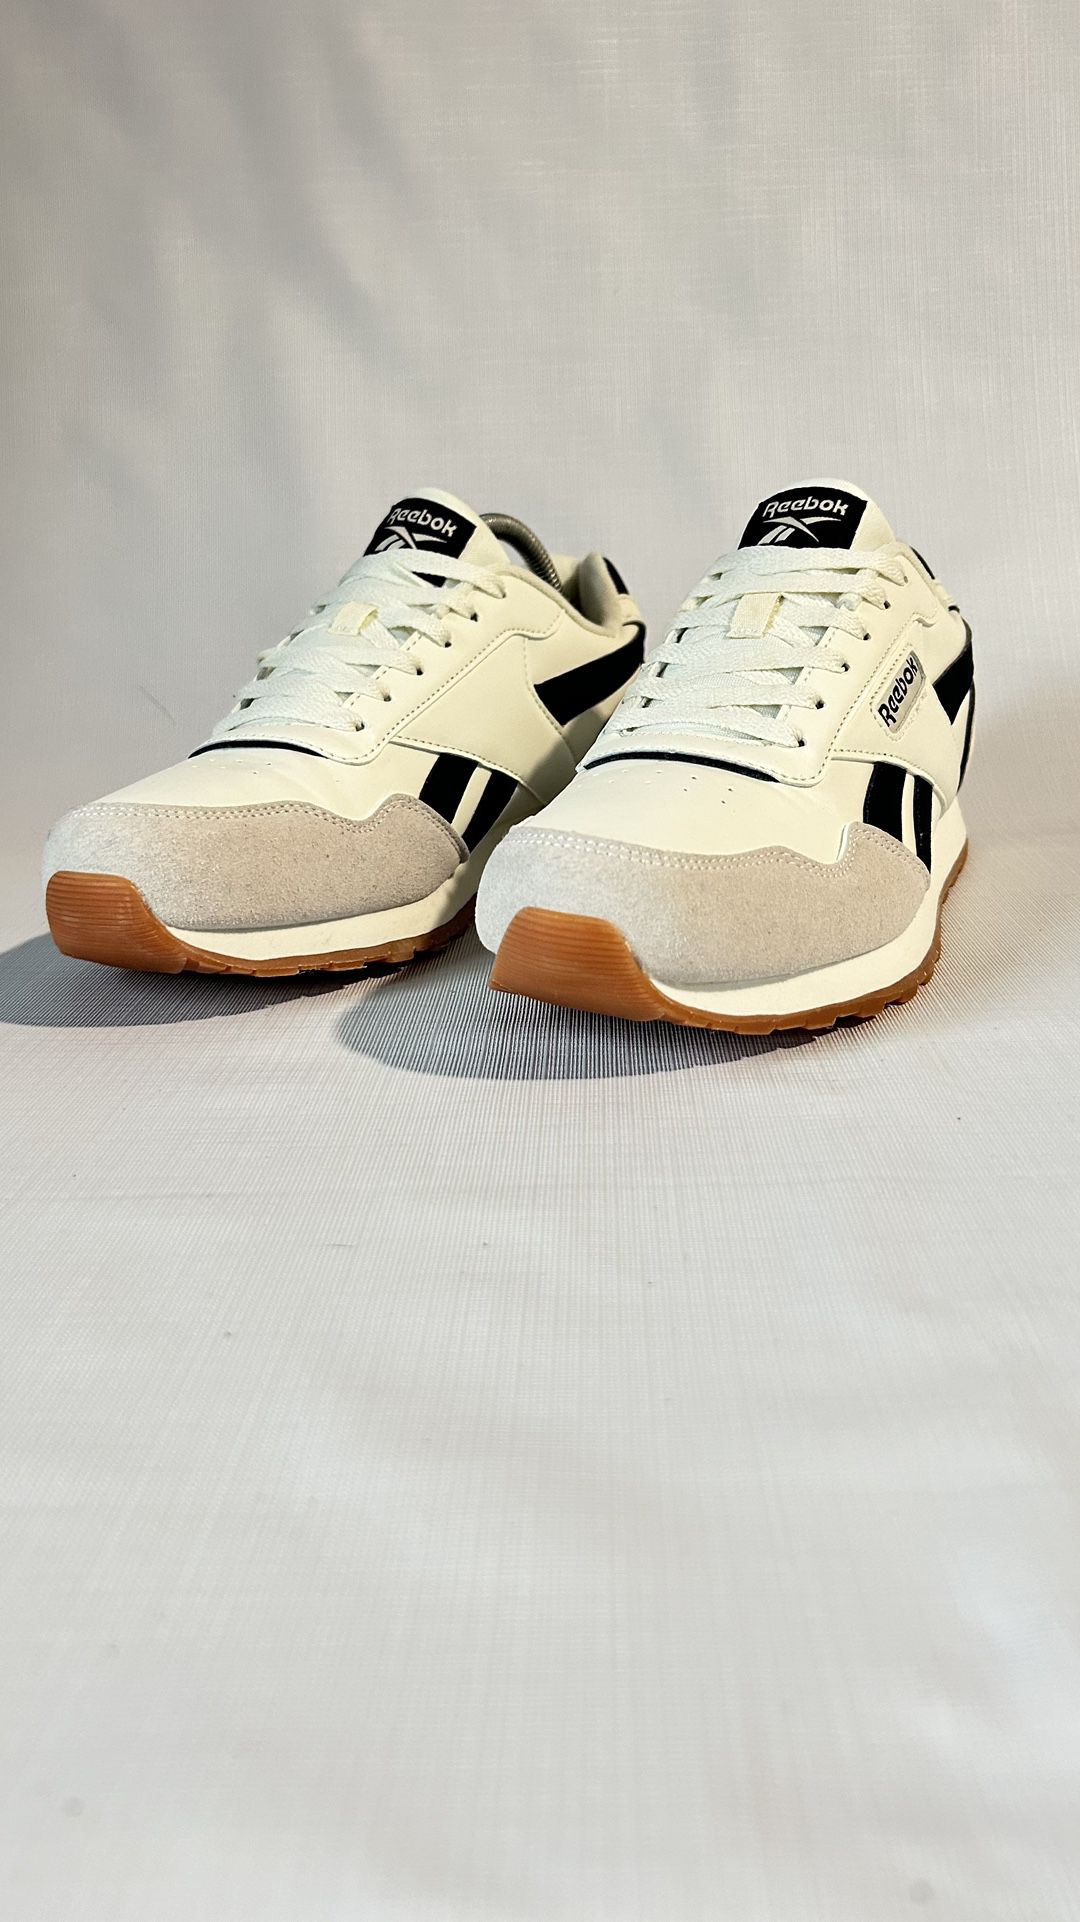 Reebok Harman Run Classic Sneakers - Timeless Style! Us 9.5